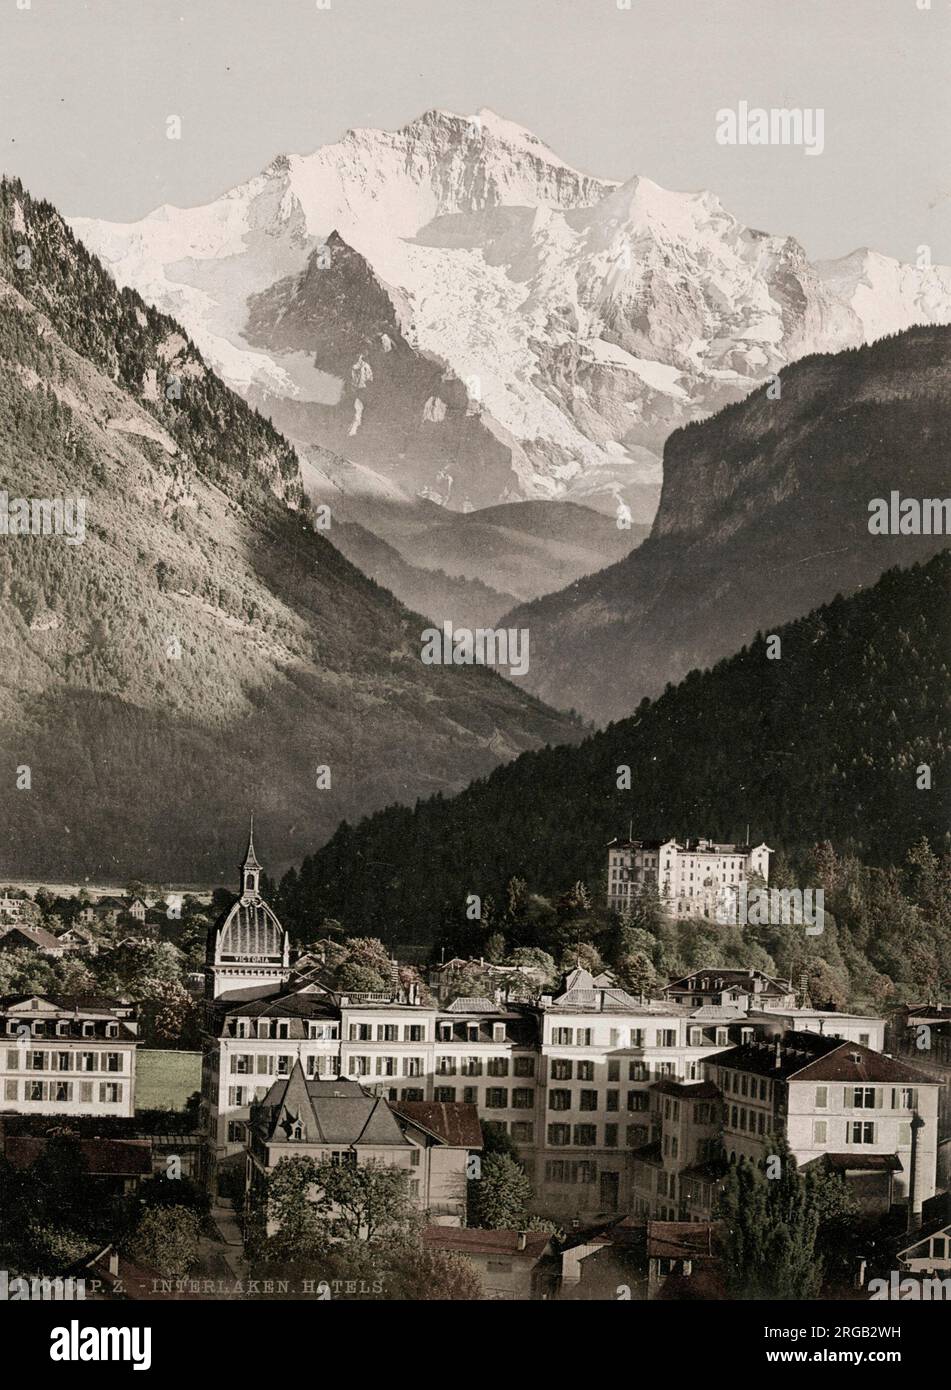 Vintage 19. Jahrhundert Foto: Interlaken Hotels, Schweiz. Stockfoto